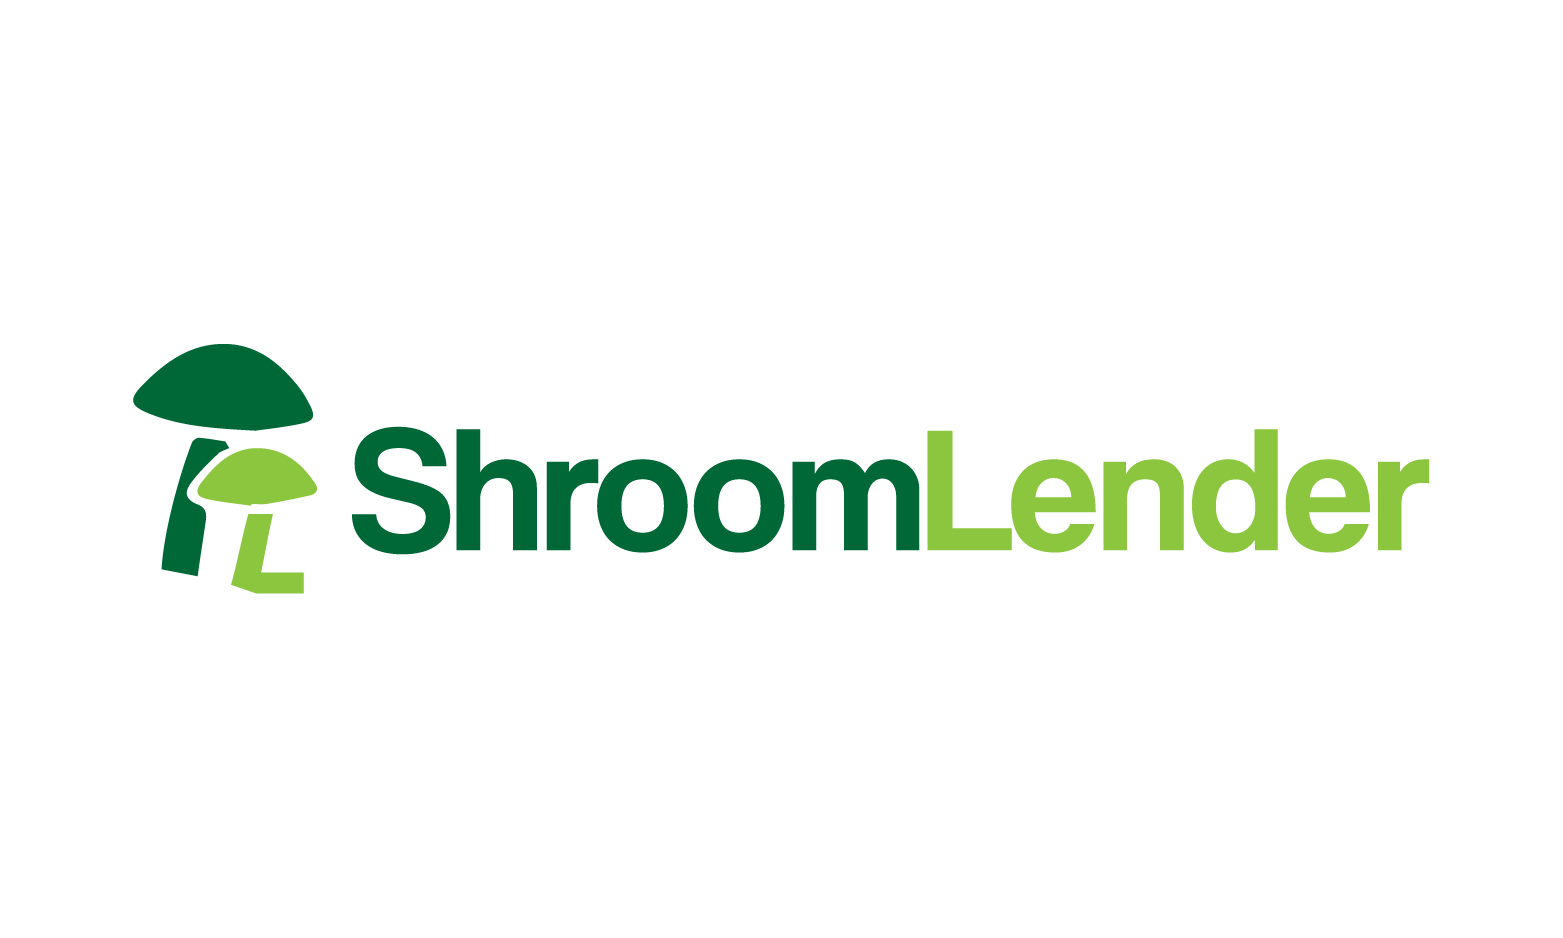 ShroomLender.com - Creative brandable domain for sale